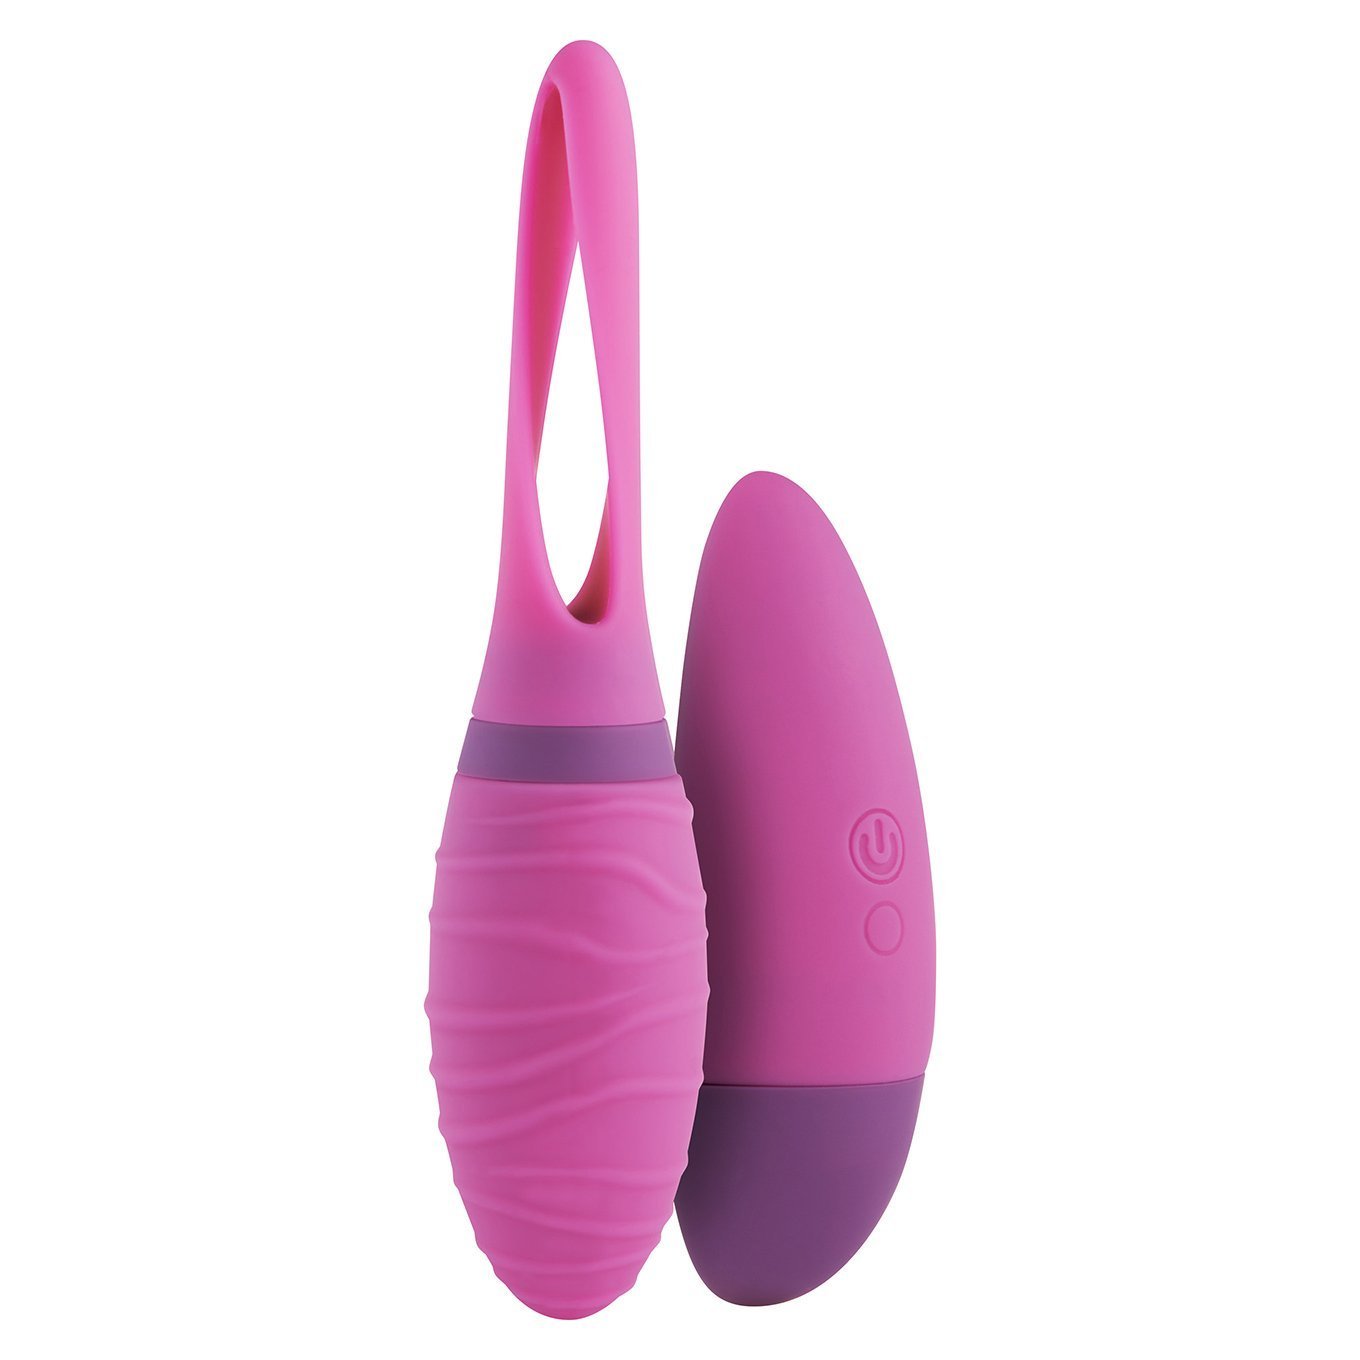 ToyJoy - Helix Remote Control Egg Vibrator (Pink) -  Wireless Remote Control Egg (Vibration) Non Rechargeable  Durio.sg